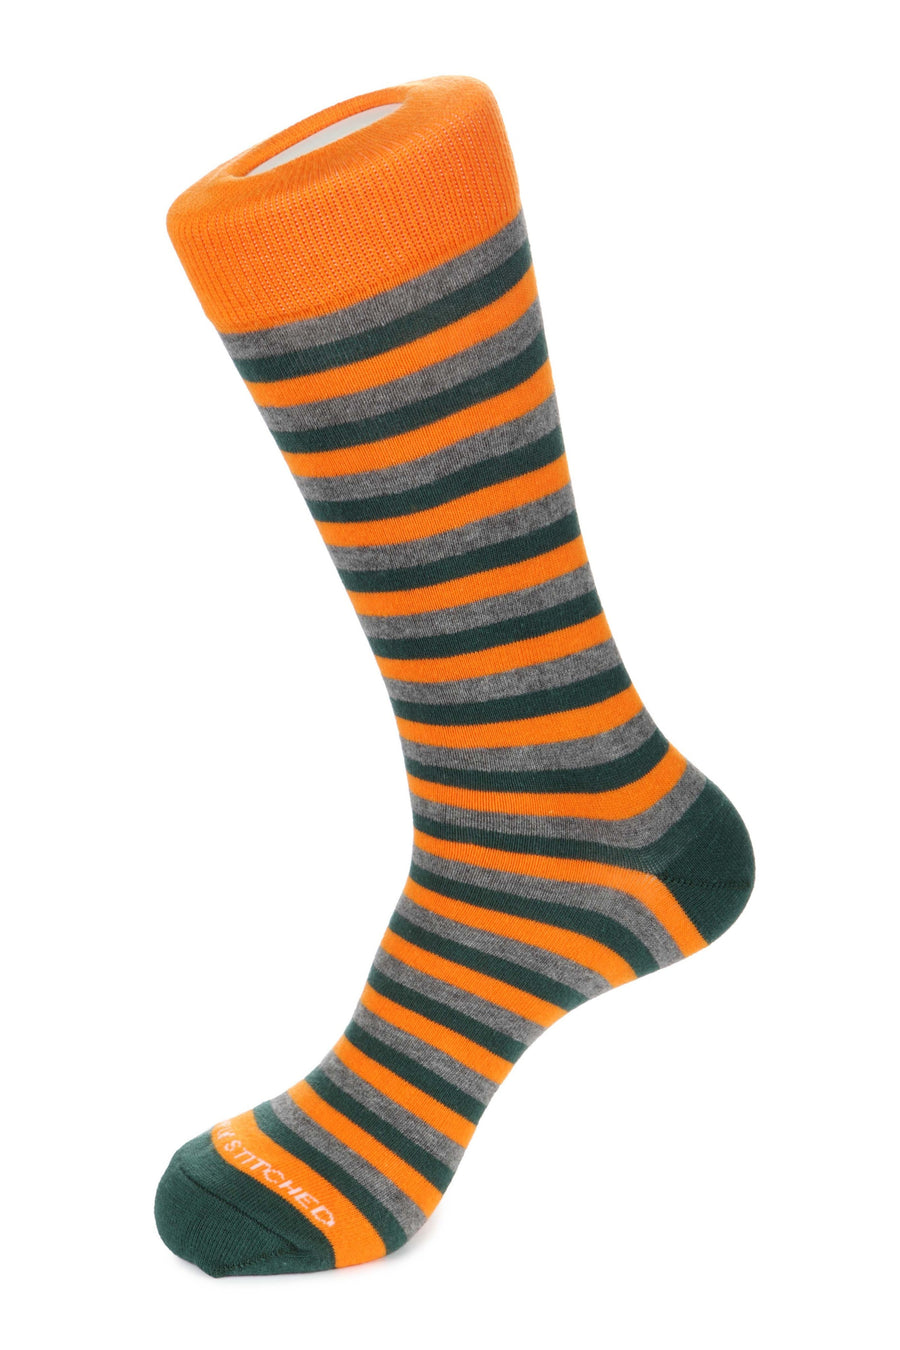 3 Color Basic Sock